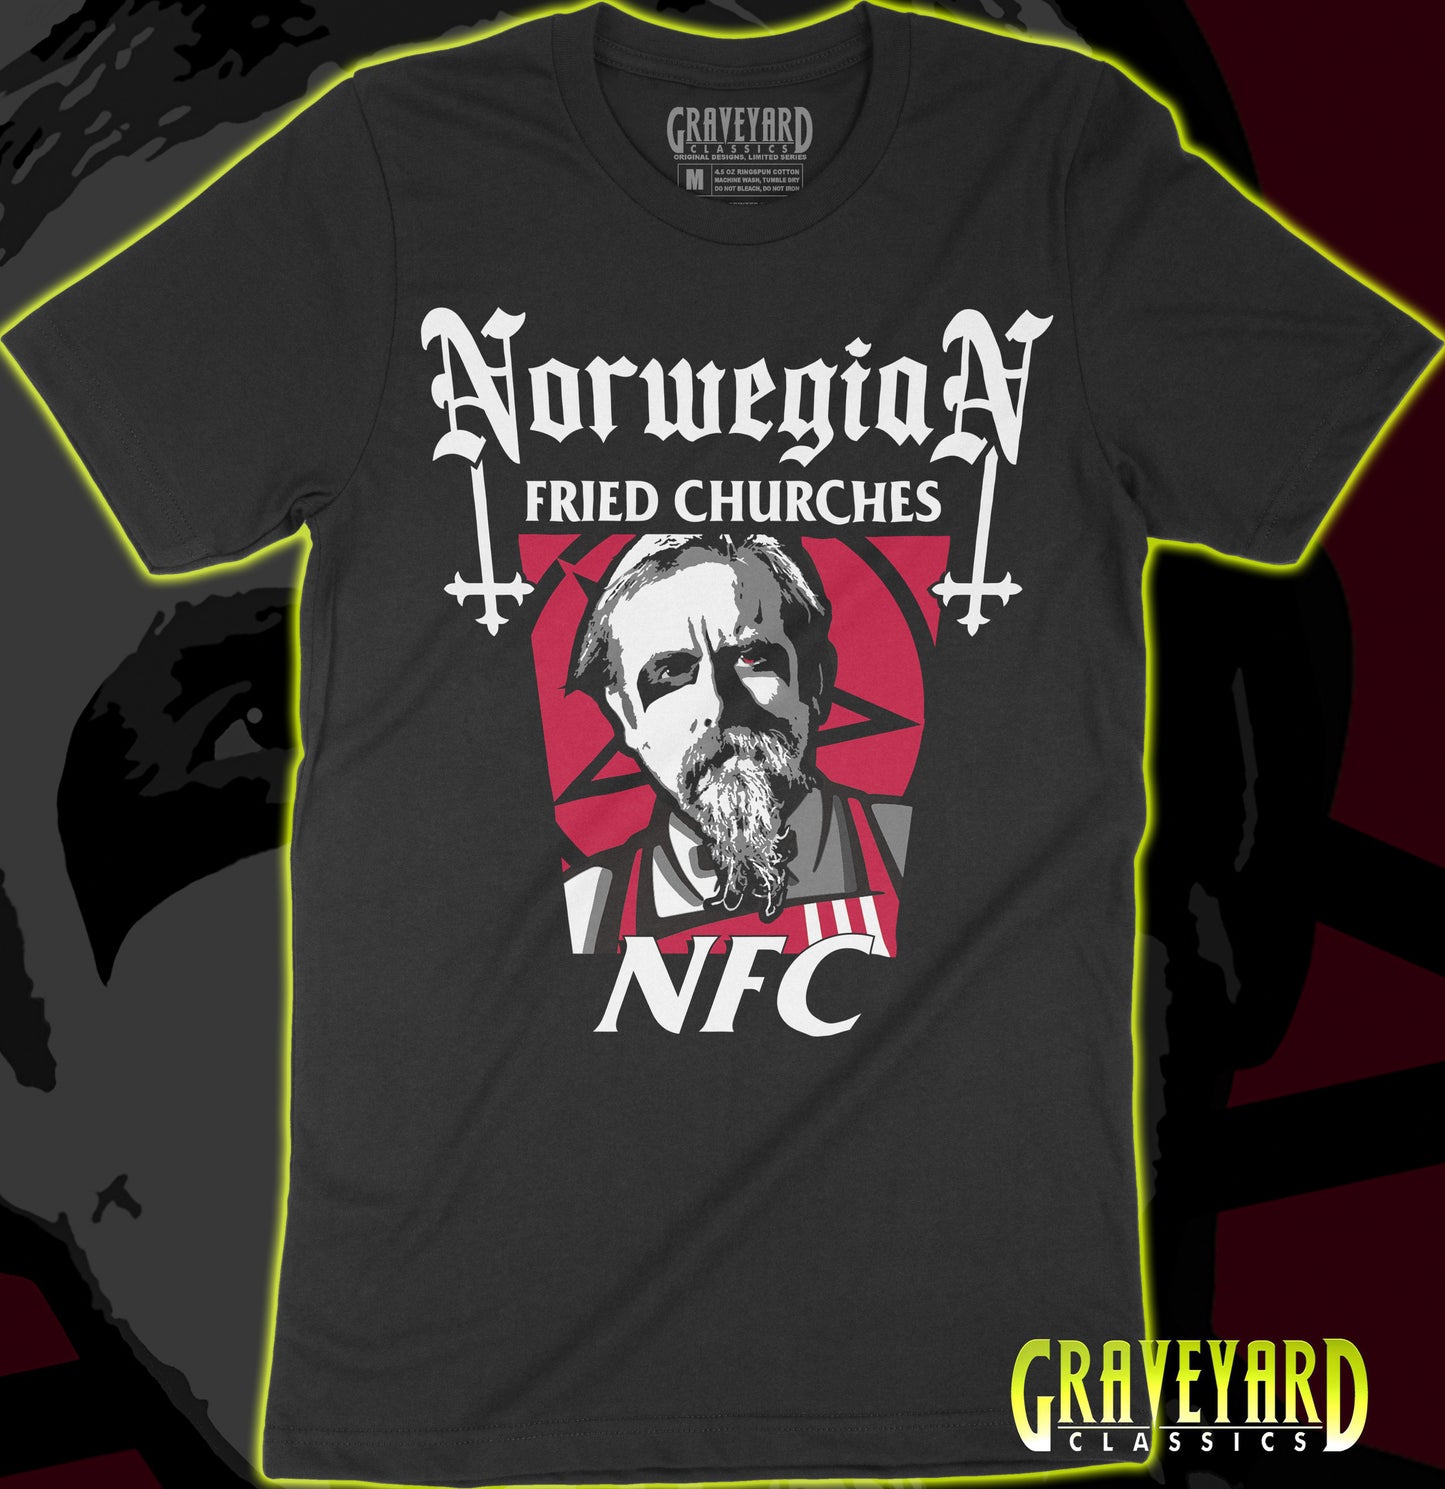 NFC - Norwegian Fried Churches T-shirt